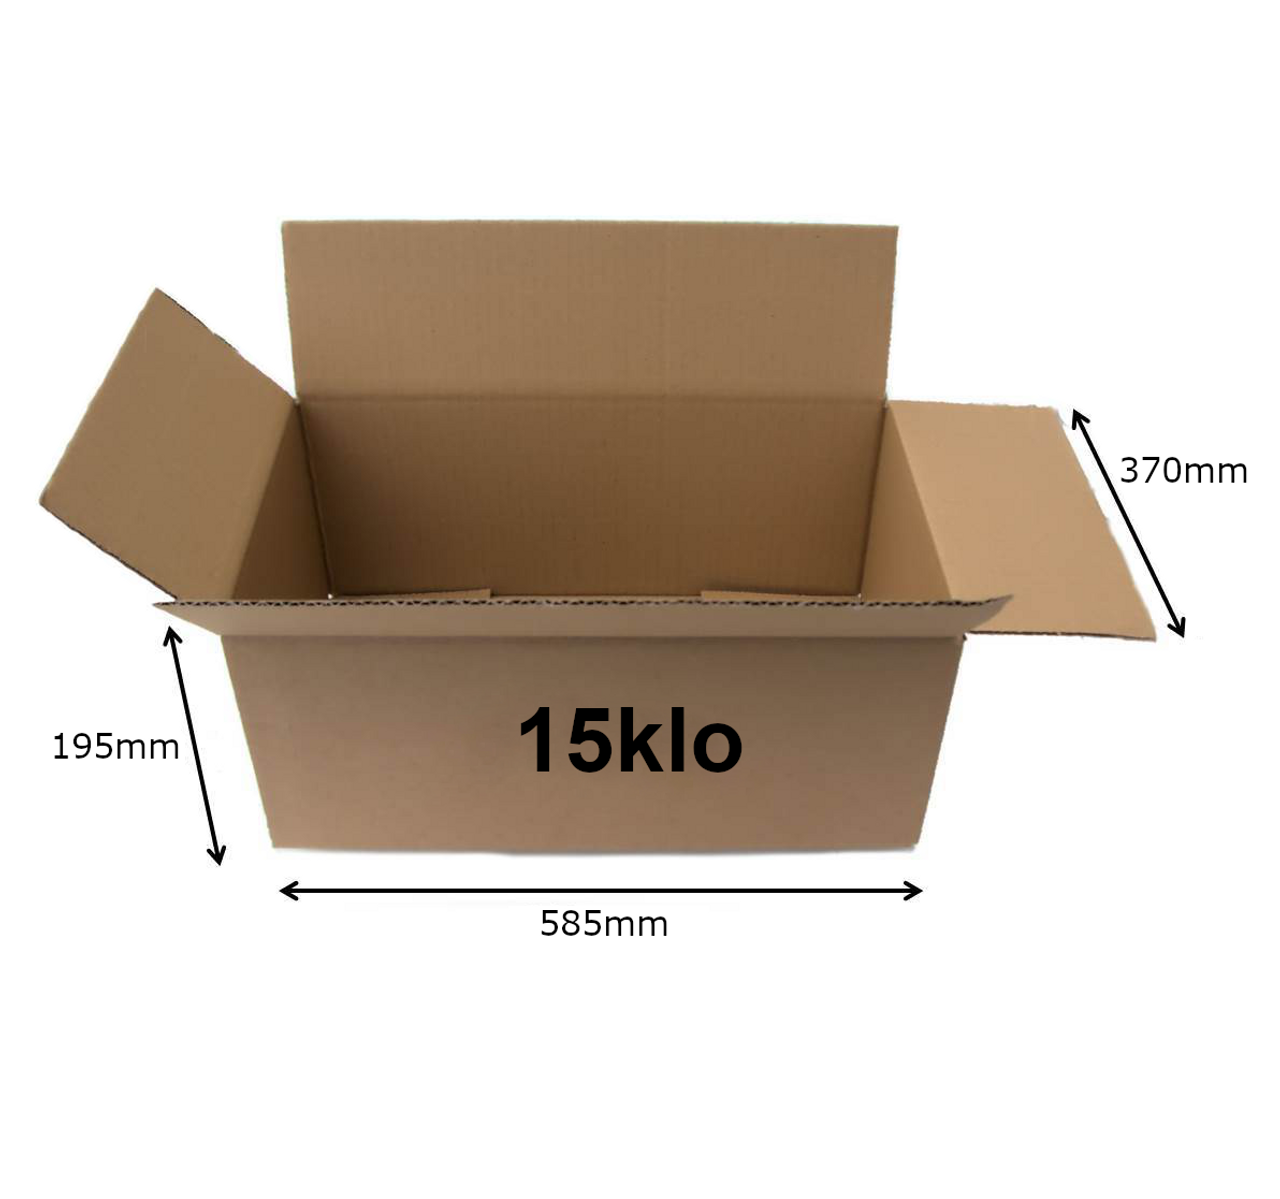 15klo Cardboard box ( 585 x 370 x 195mm ) SAMPLE BOX